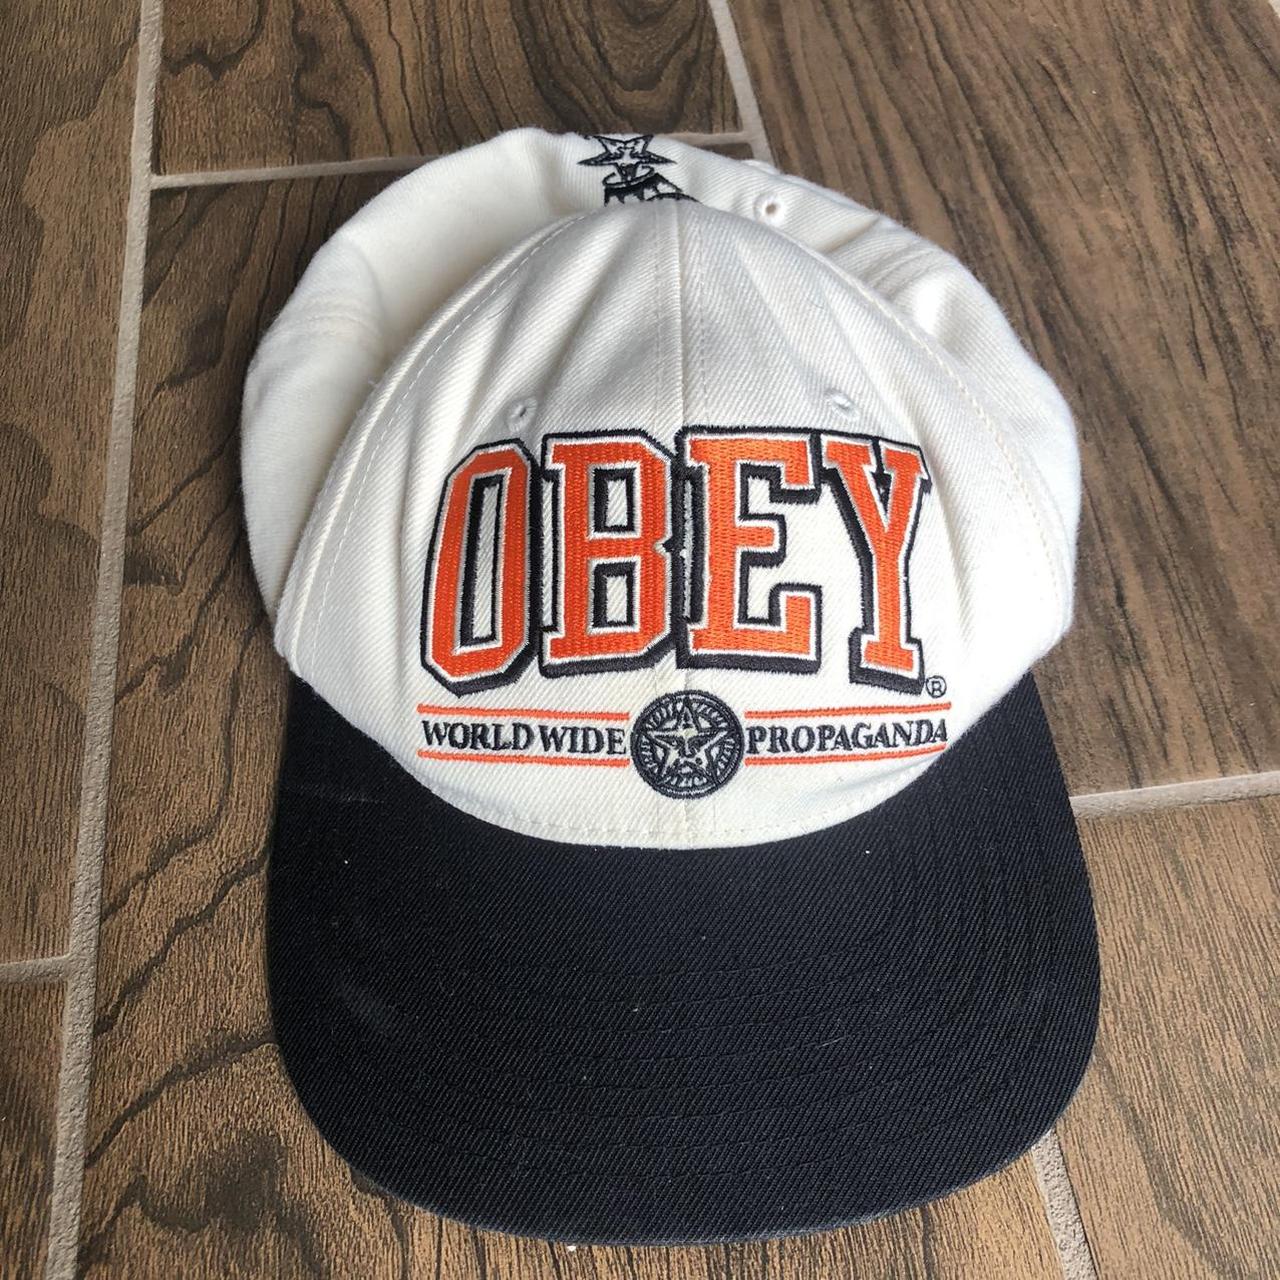 Obey Men's Hat